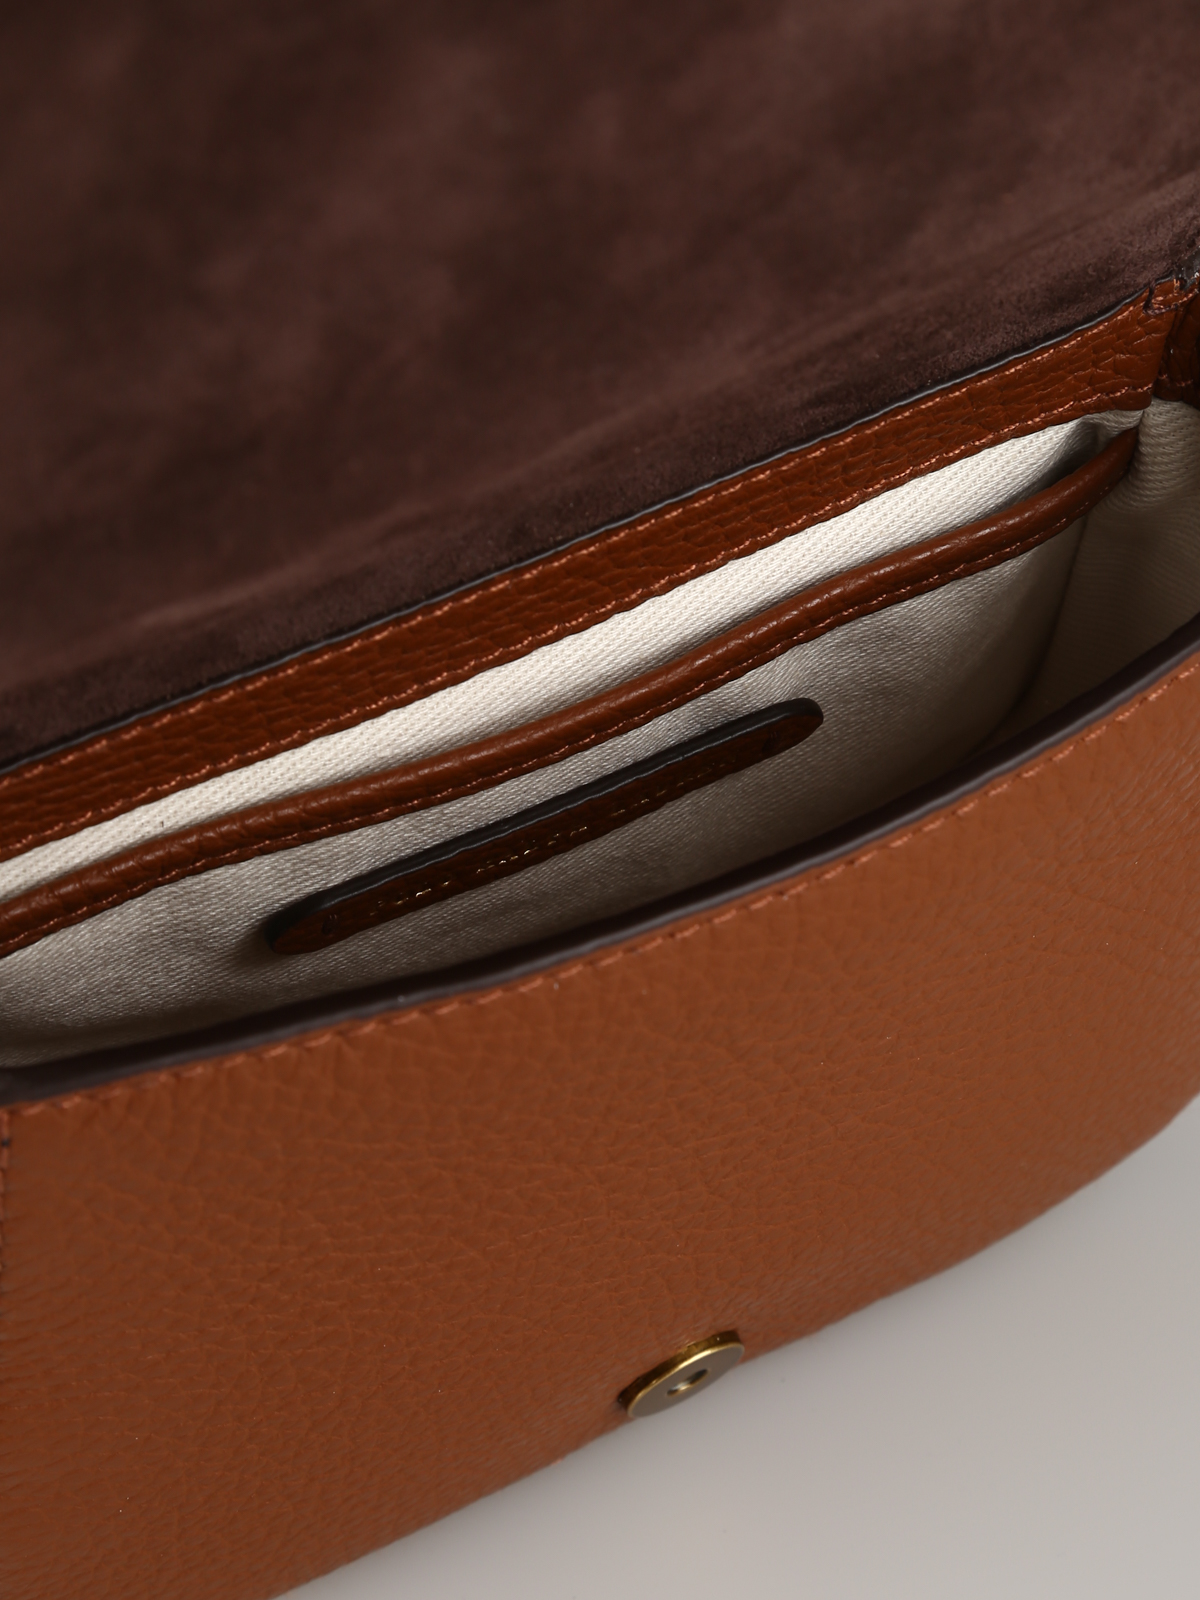 Shoulder bags Polo Ralph Lauren - Lennox Mini brown leather shoulder bag -  428722528002